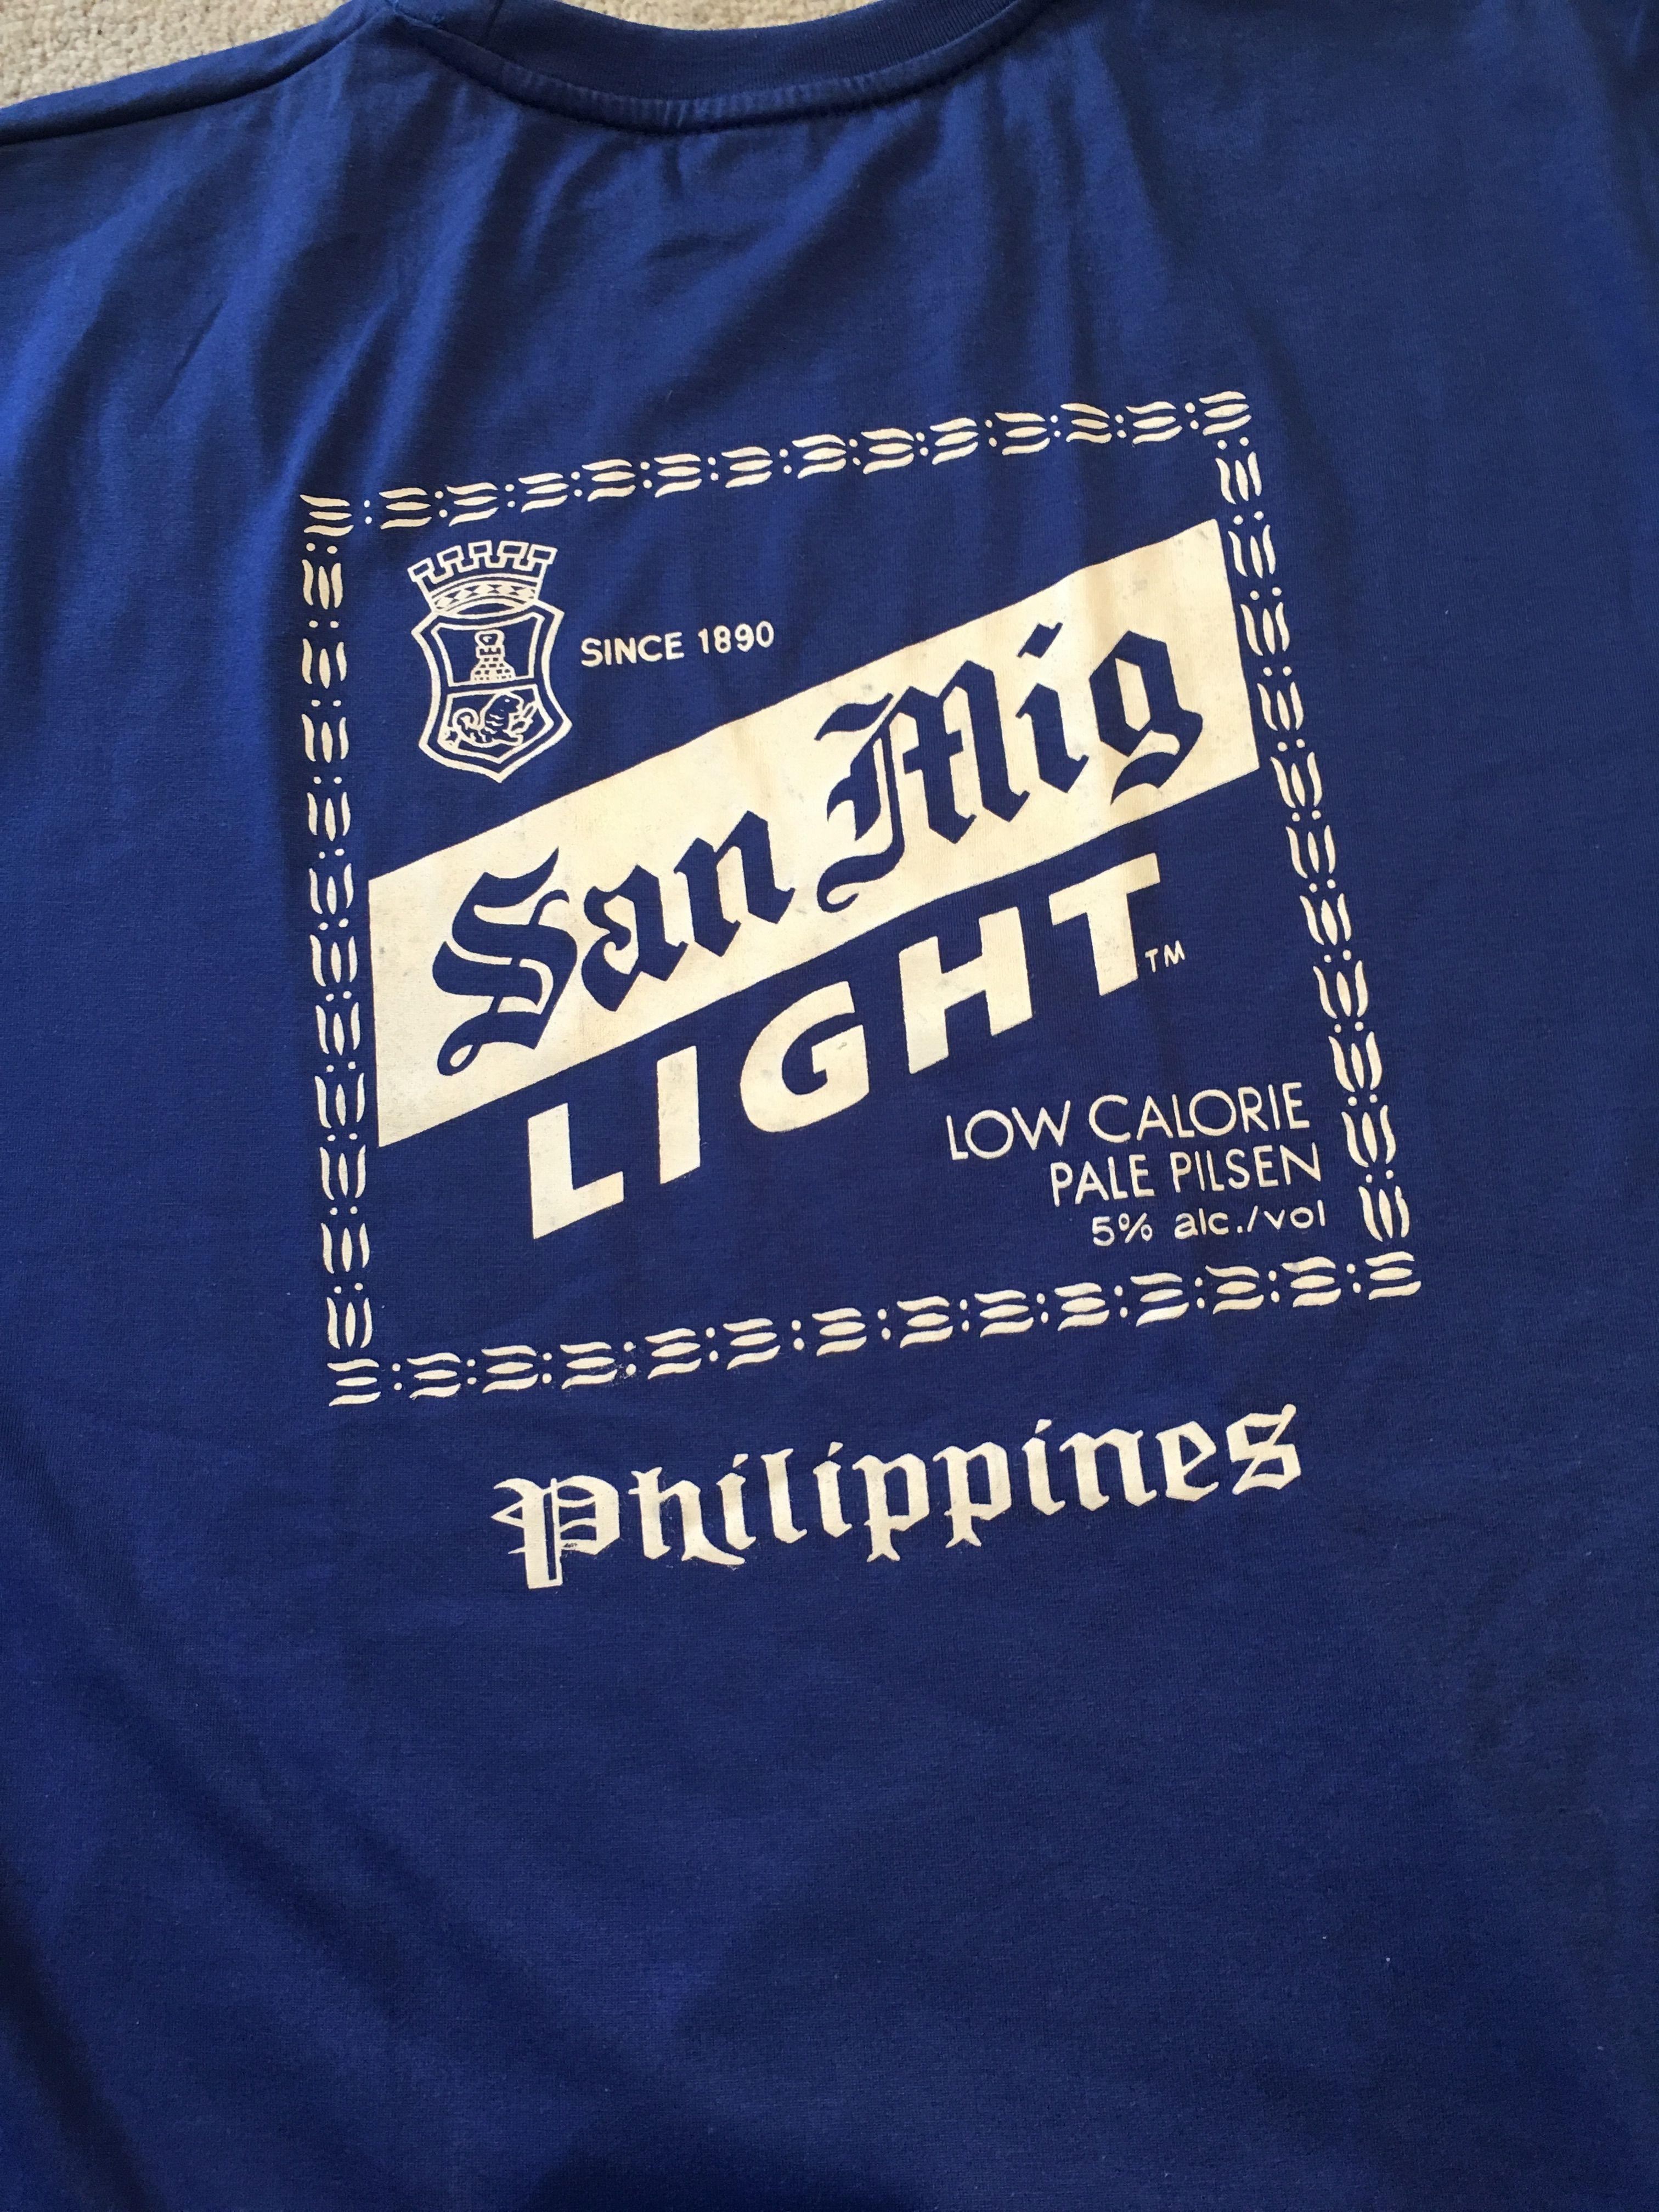 San Mig Light Logo - San Mig Light Beer Philippines on a new XXL Blue Tee Shirt: San